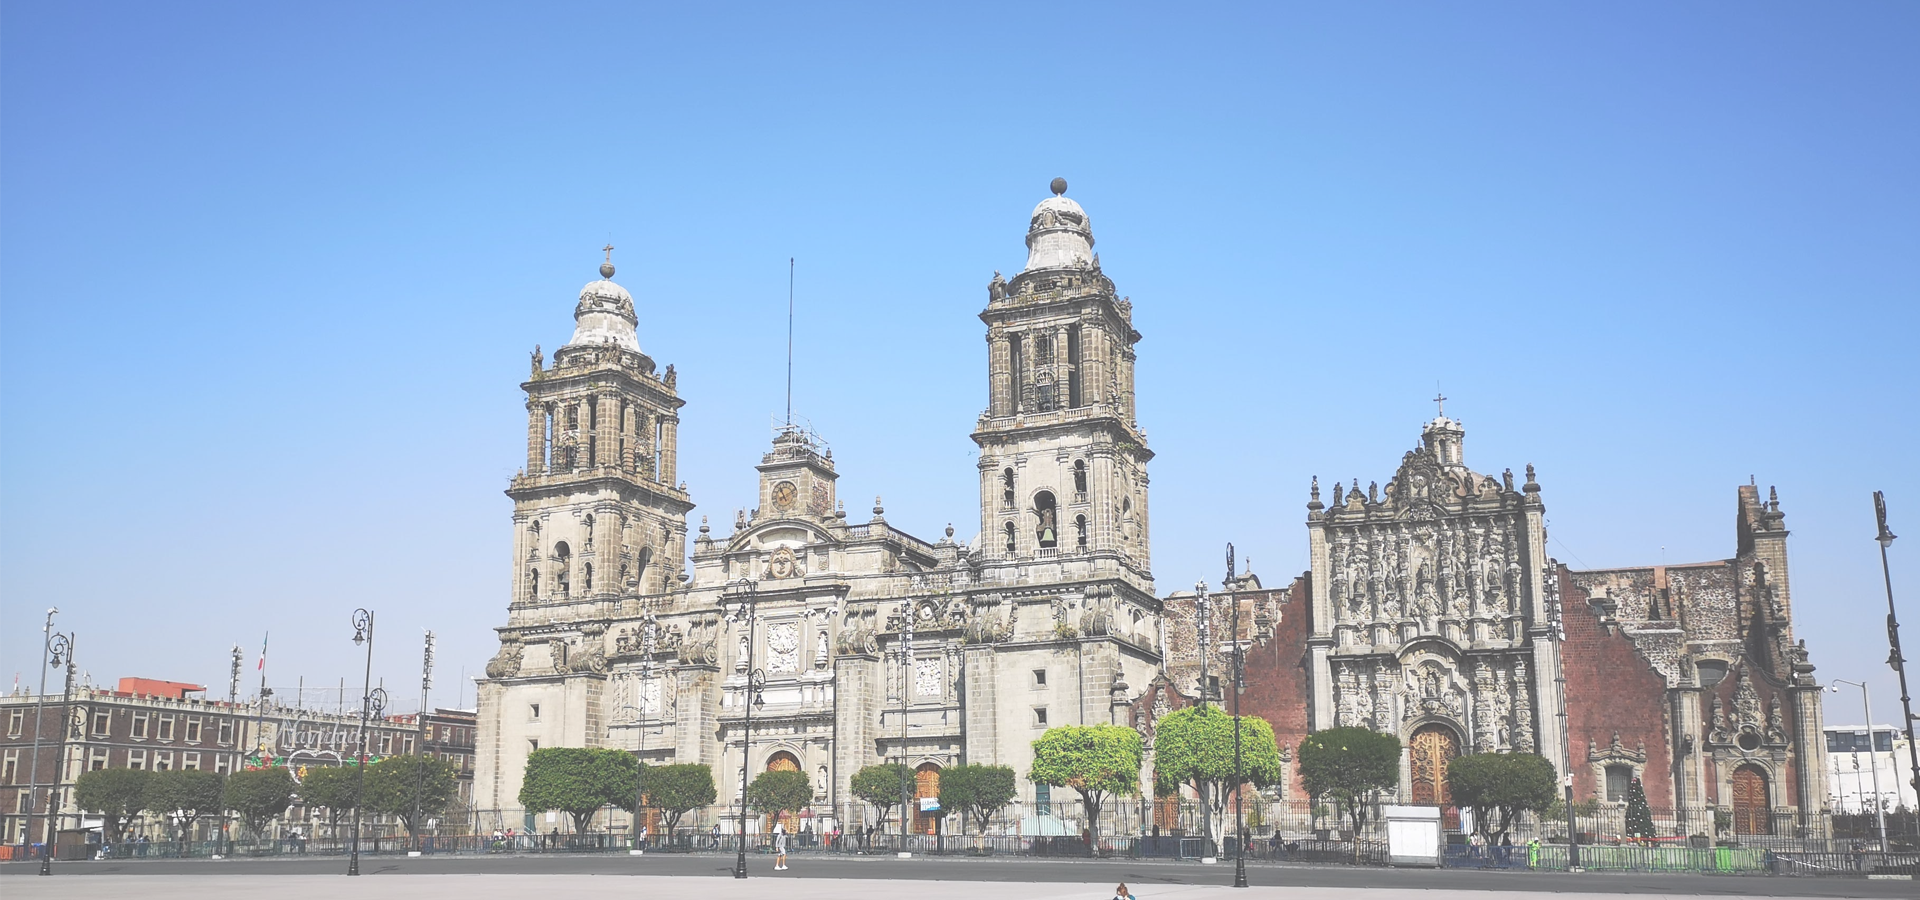 Centro Histórico, Centro, Mexico City, CDMX, Mexico